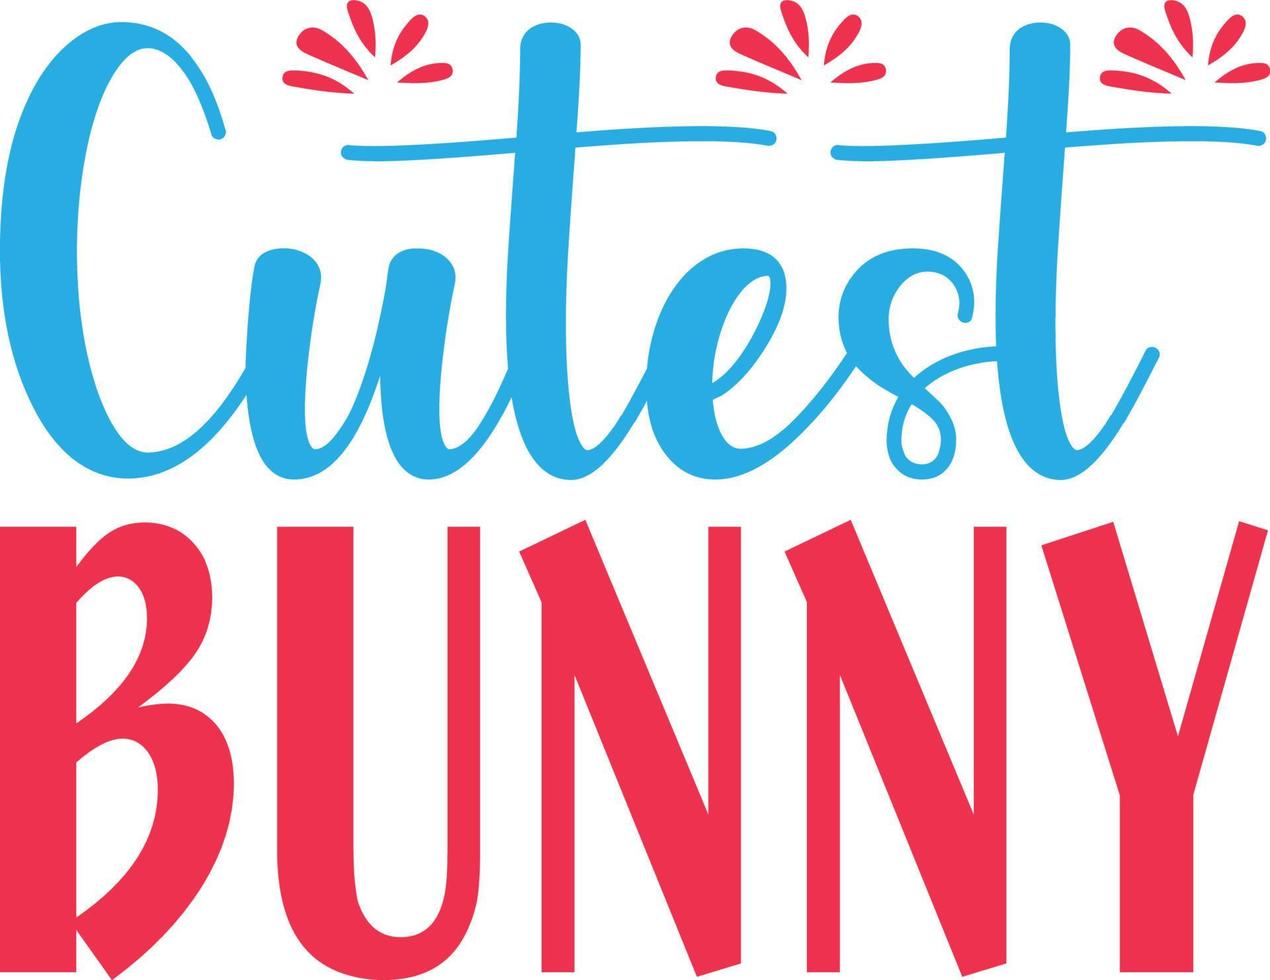 Cutest Bunny Vol  1 vector